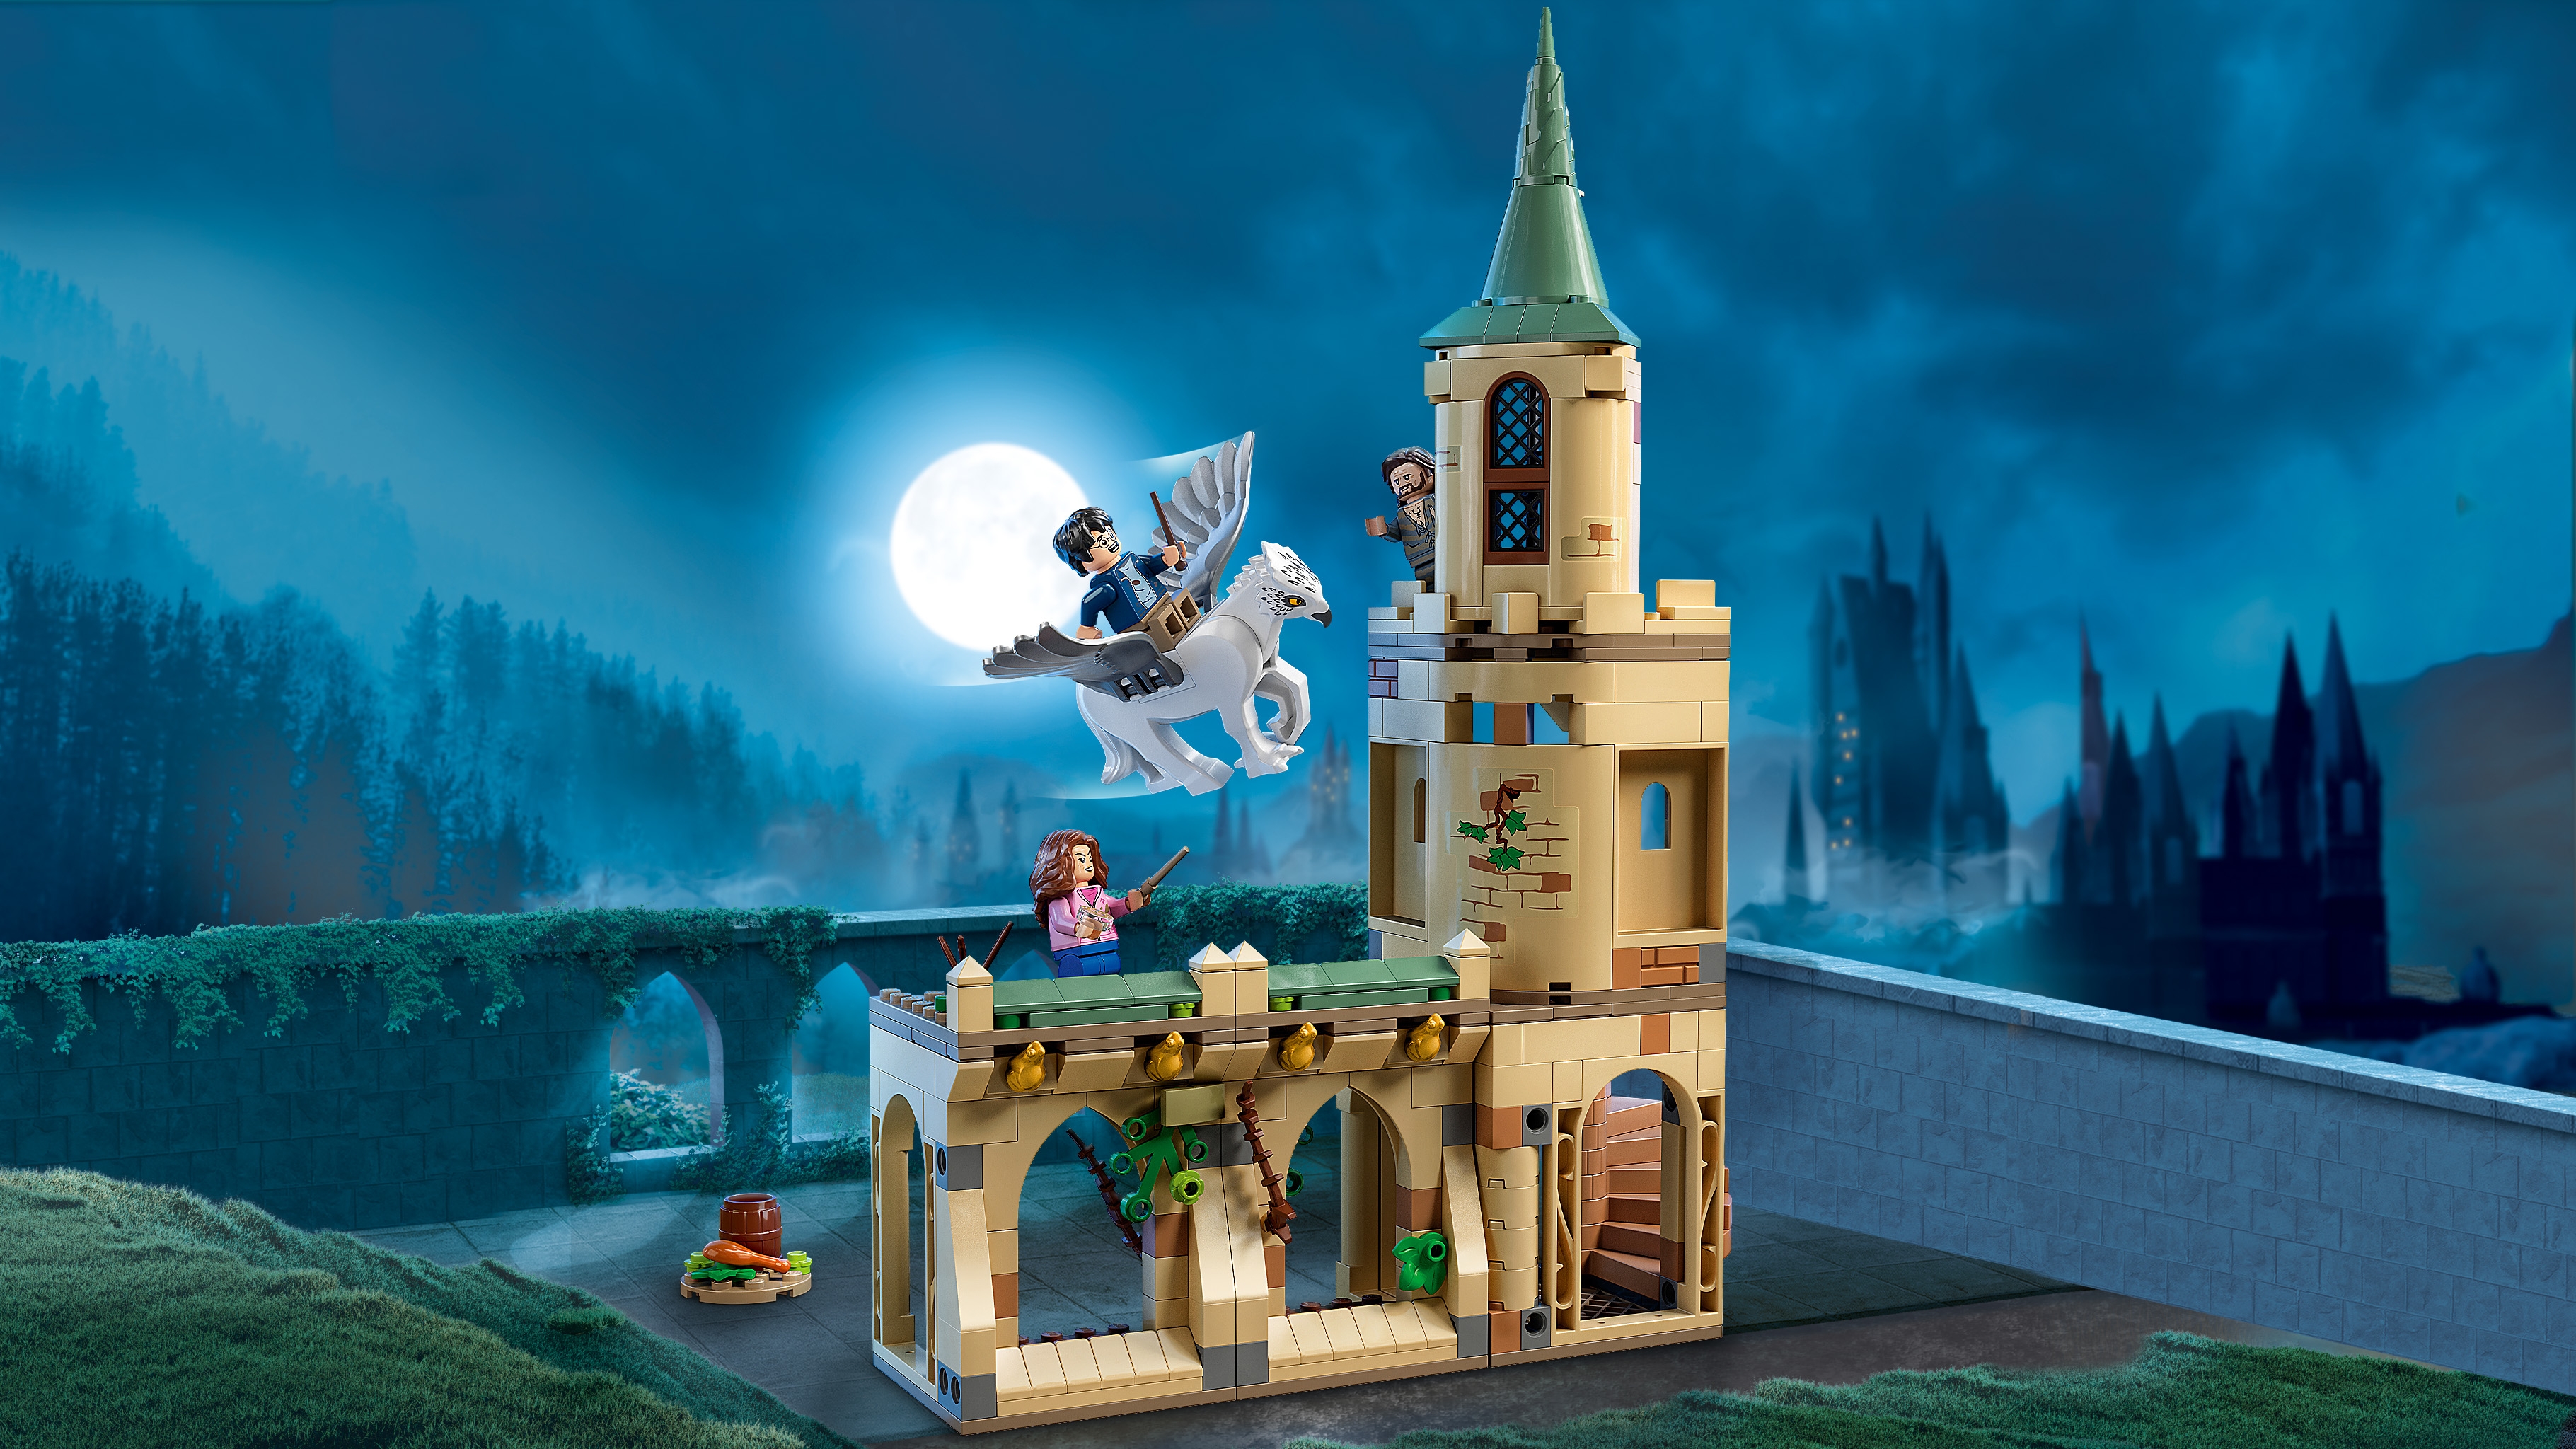 LEGO 76401 La cour de Poudlard : le sauvetage de Sirius (Harry